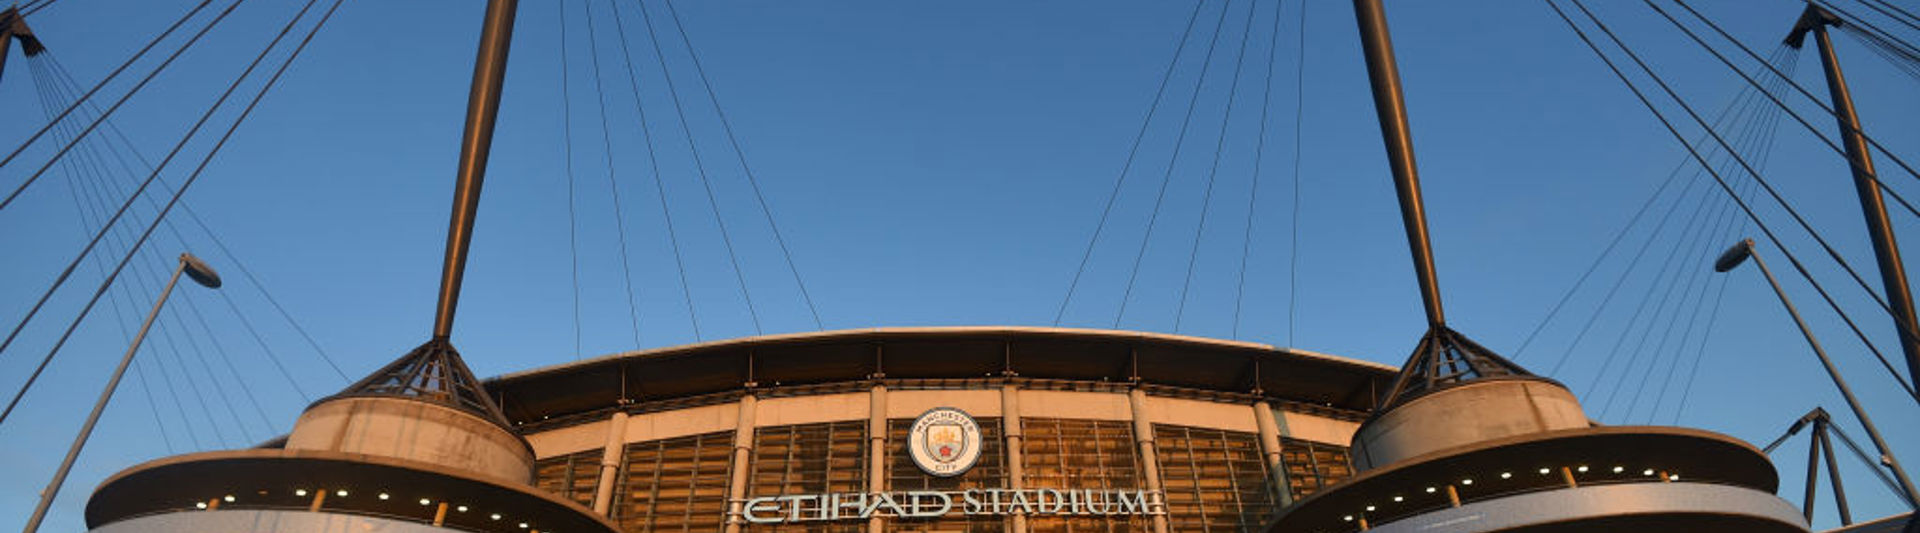 HOME: The Etihad Stadium